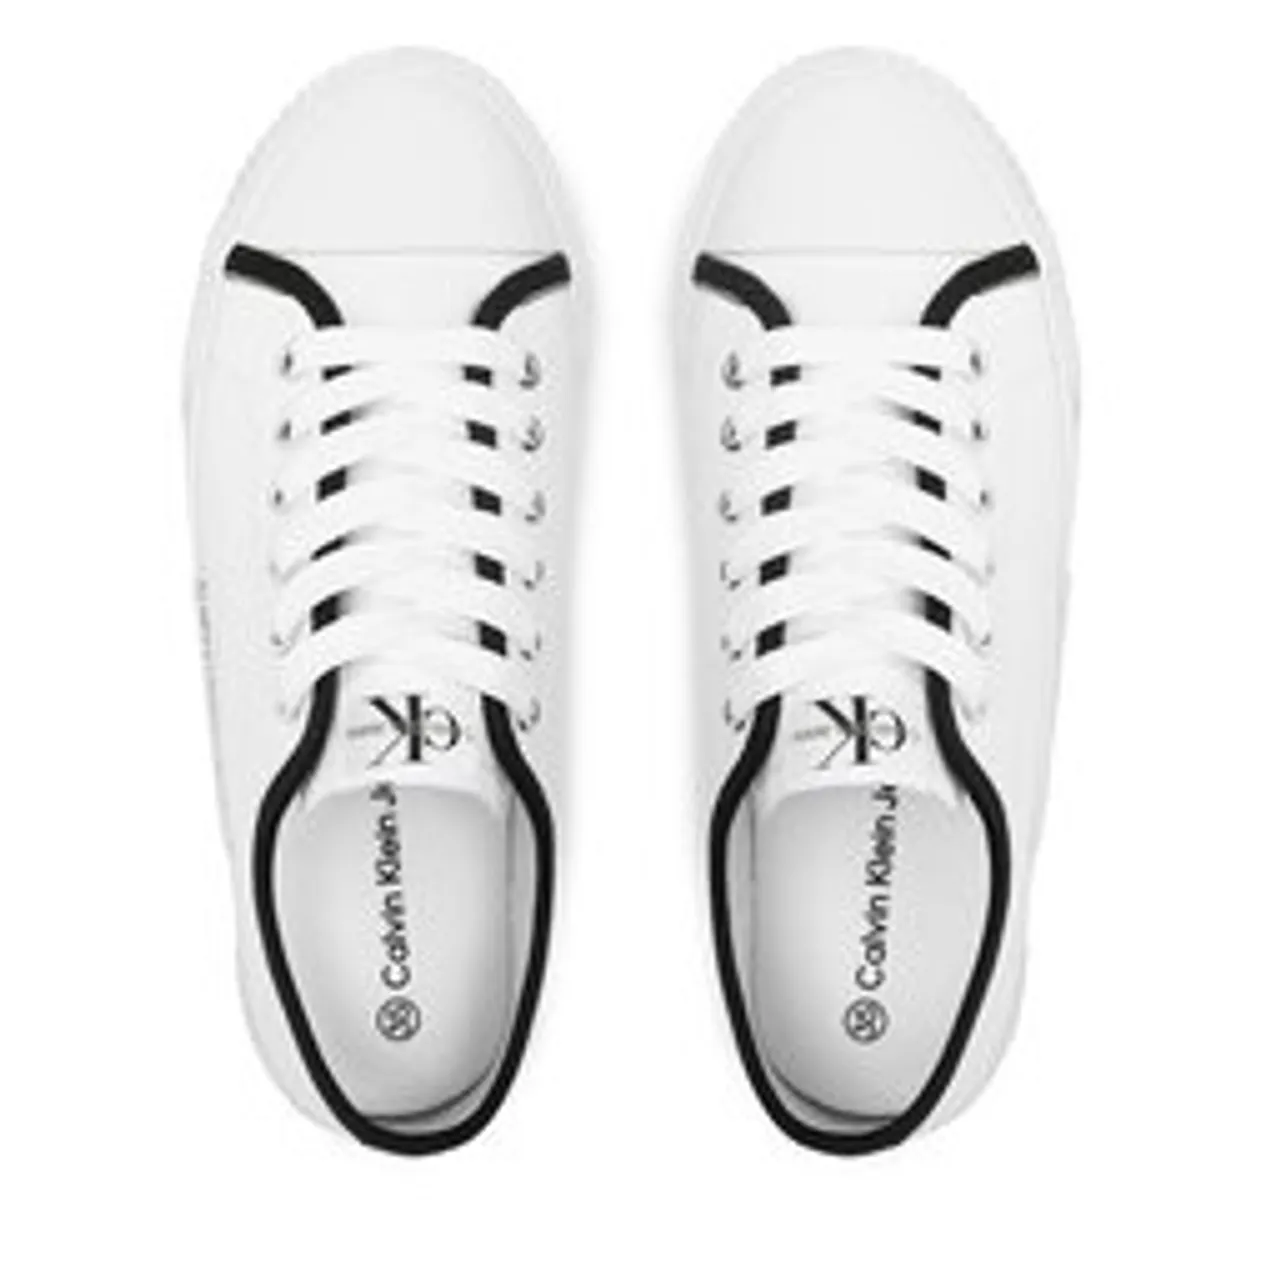 Sneakers Calvin Klein Jeans V3X9-80873-0890 S White 100